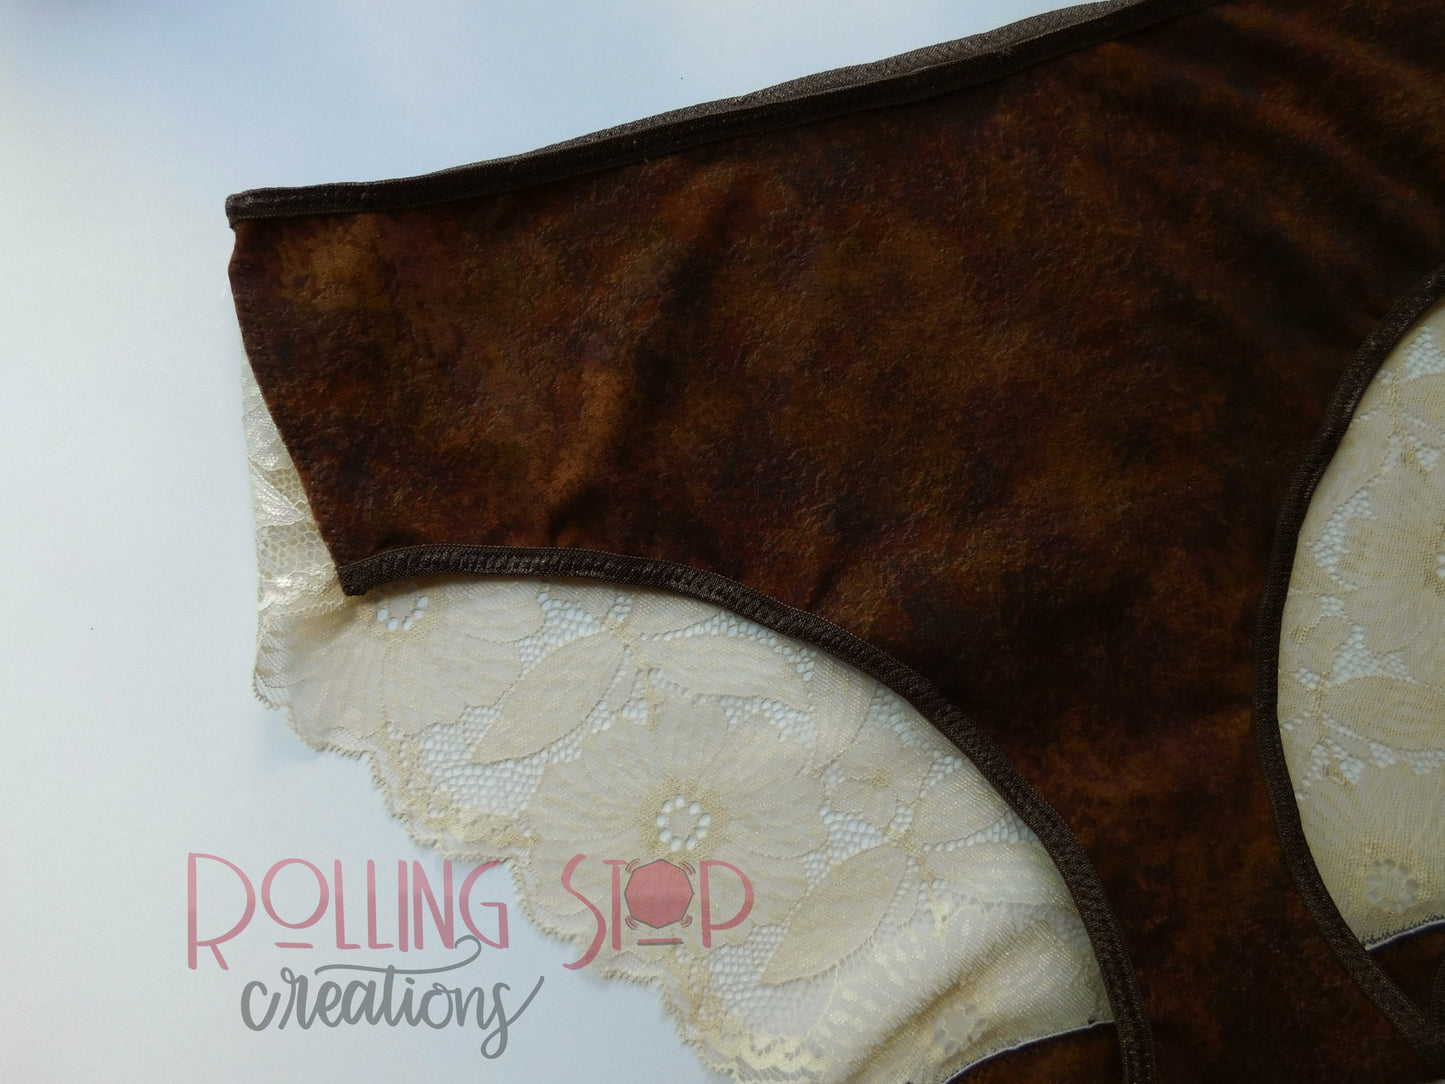 Rainbow Powder Lace Back Pantydrawls by Rolling Stop Creations sold by Rolling Stop Creations 